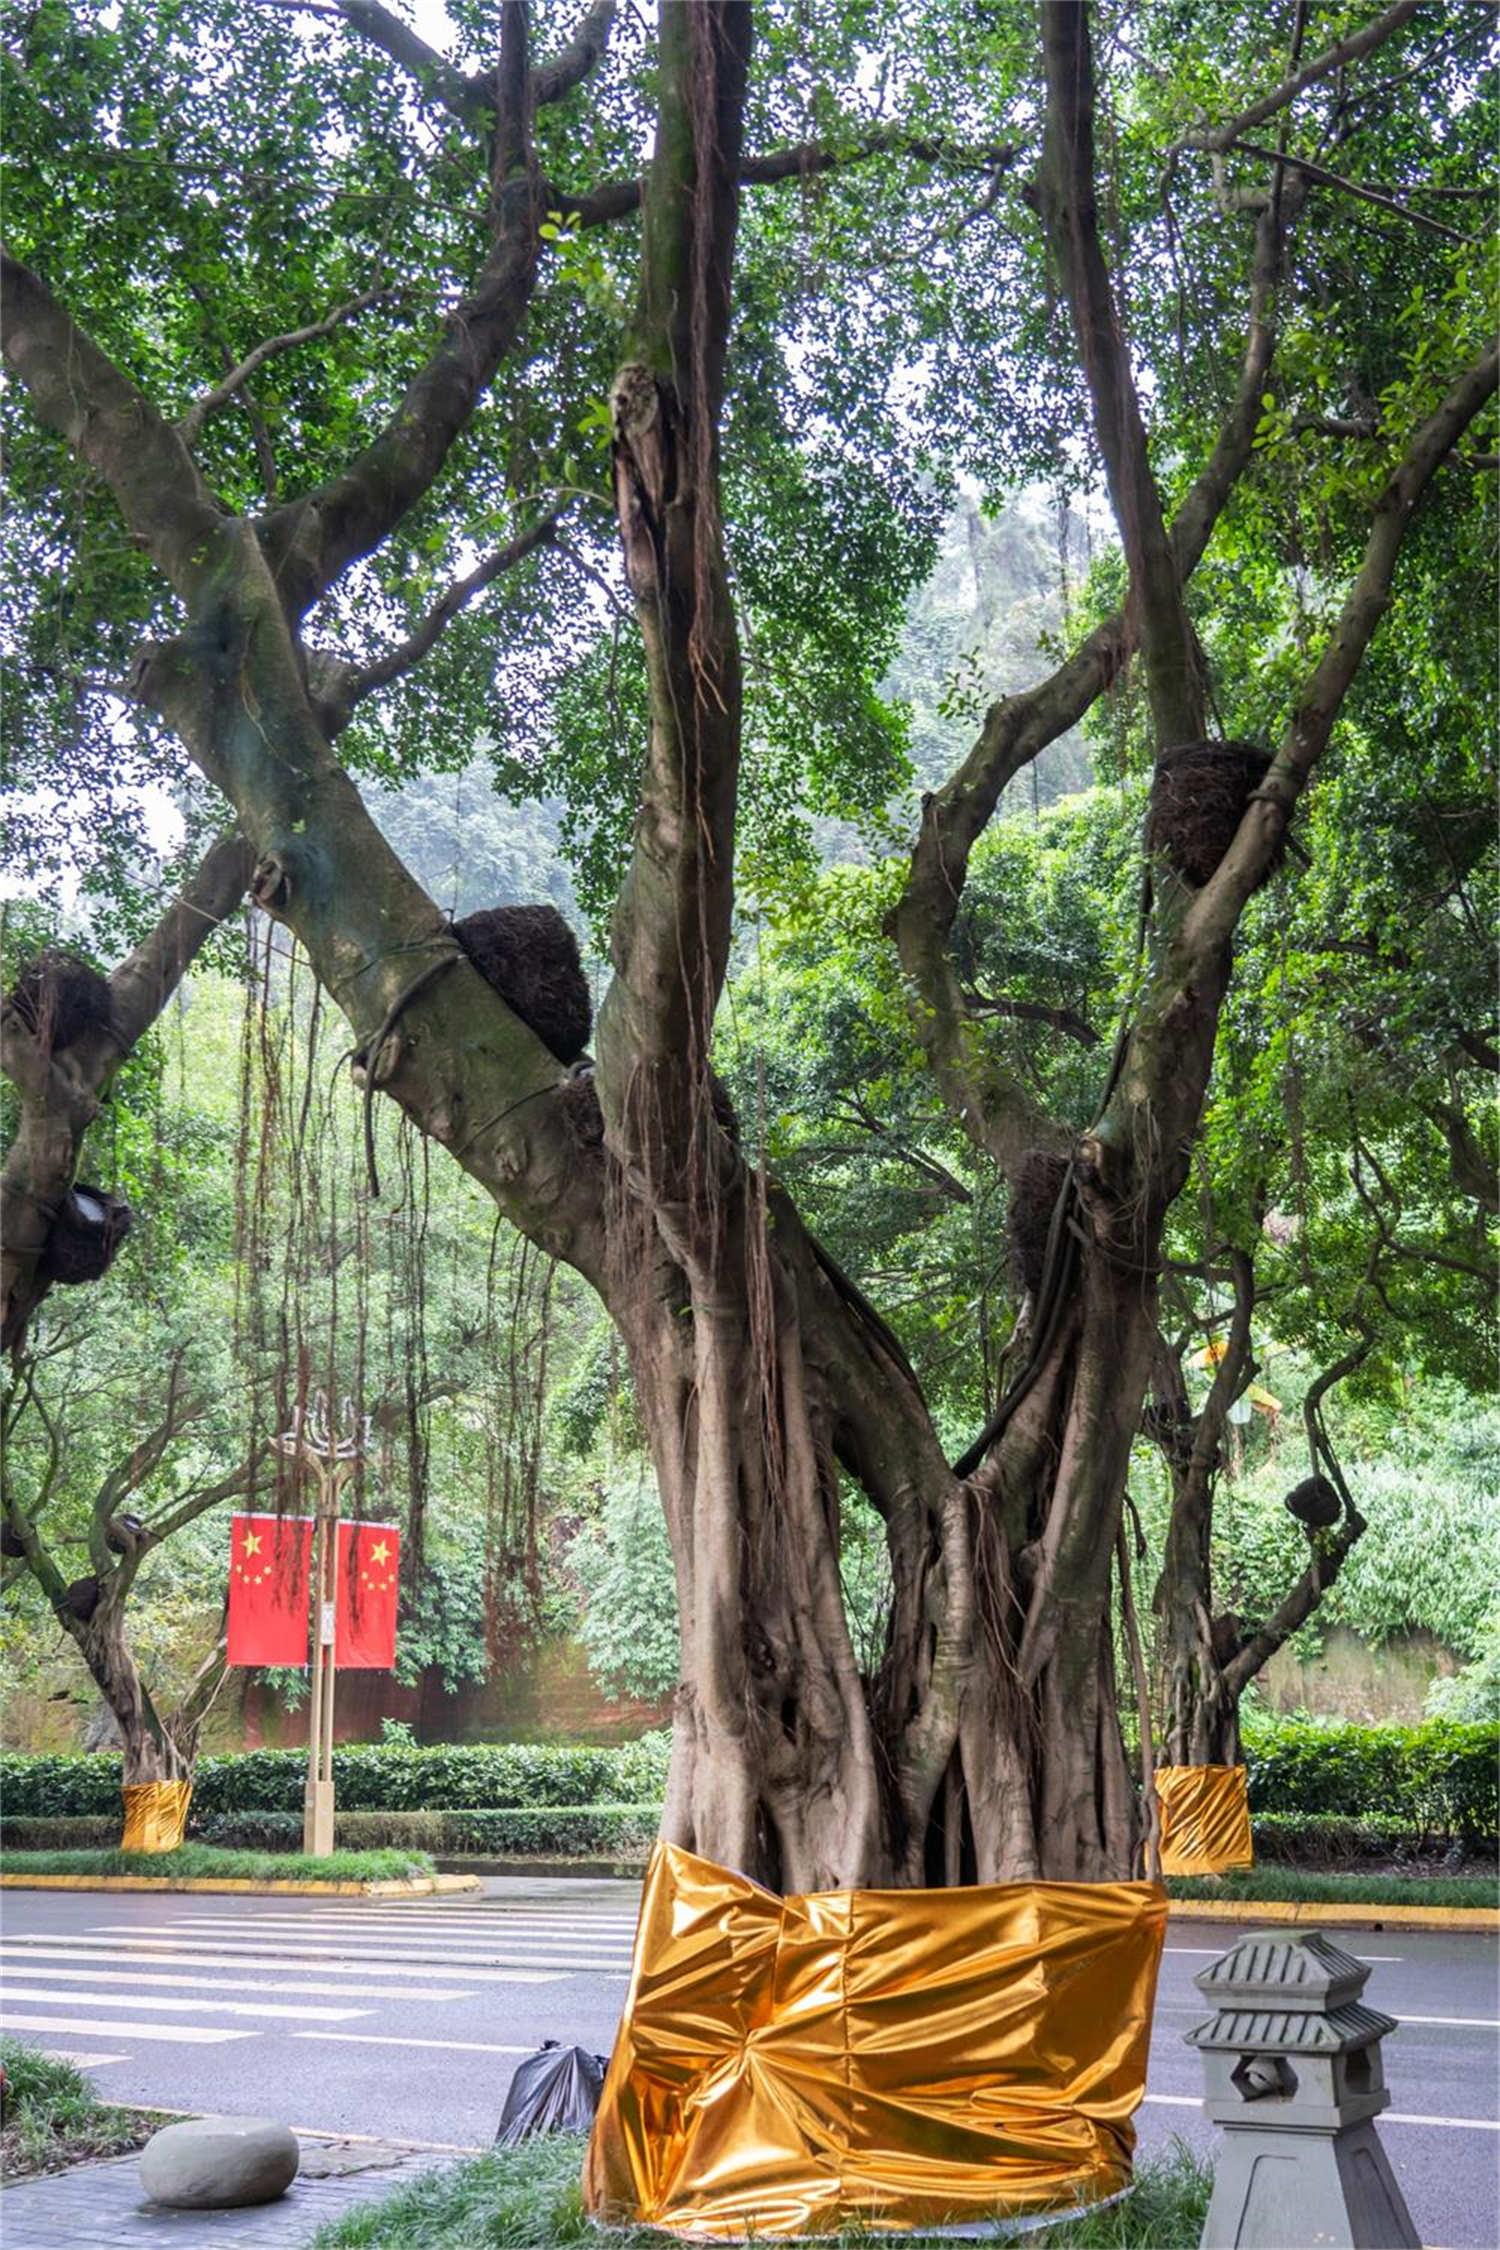 banyan tree